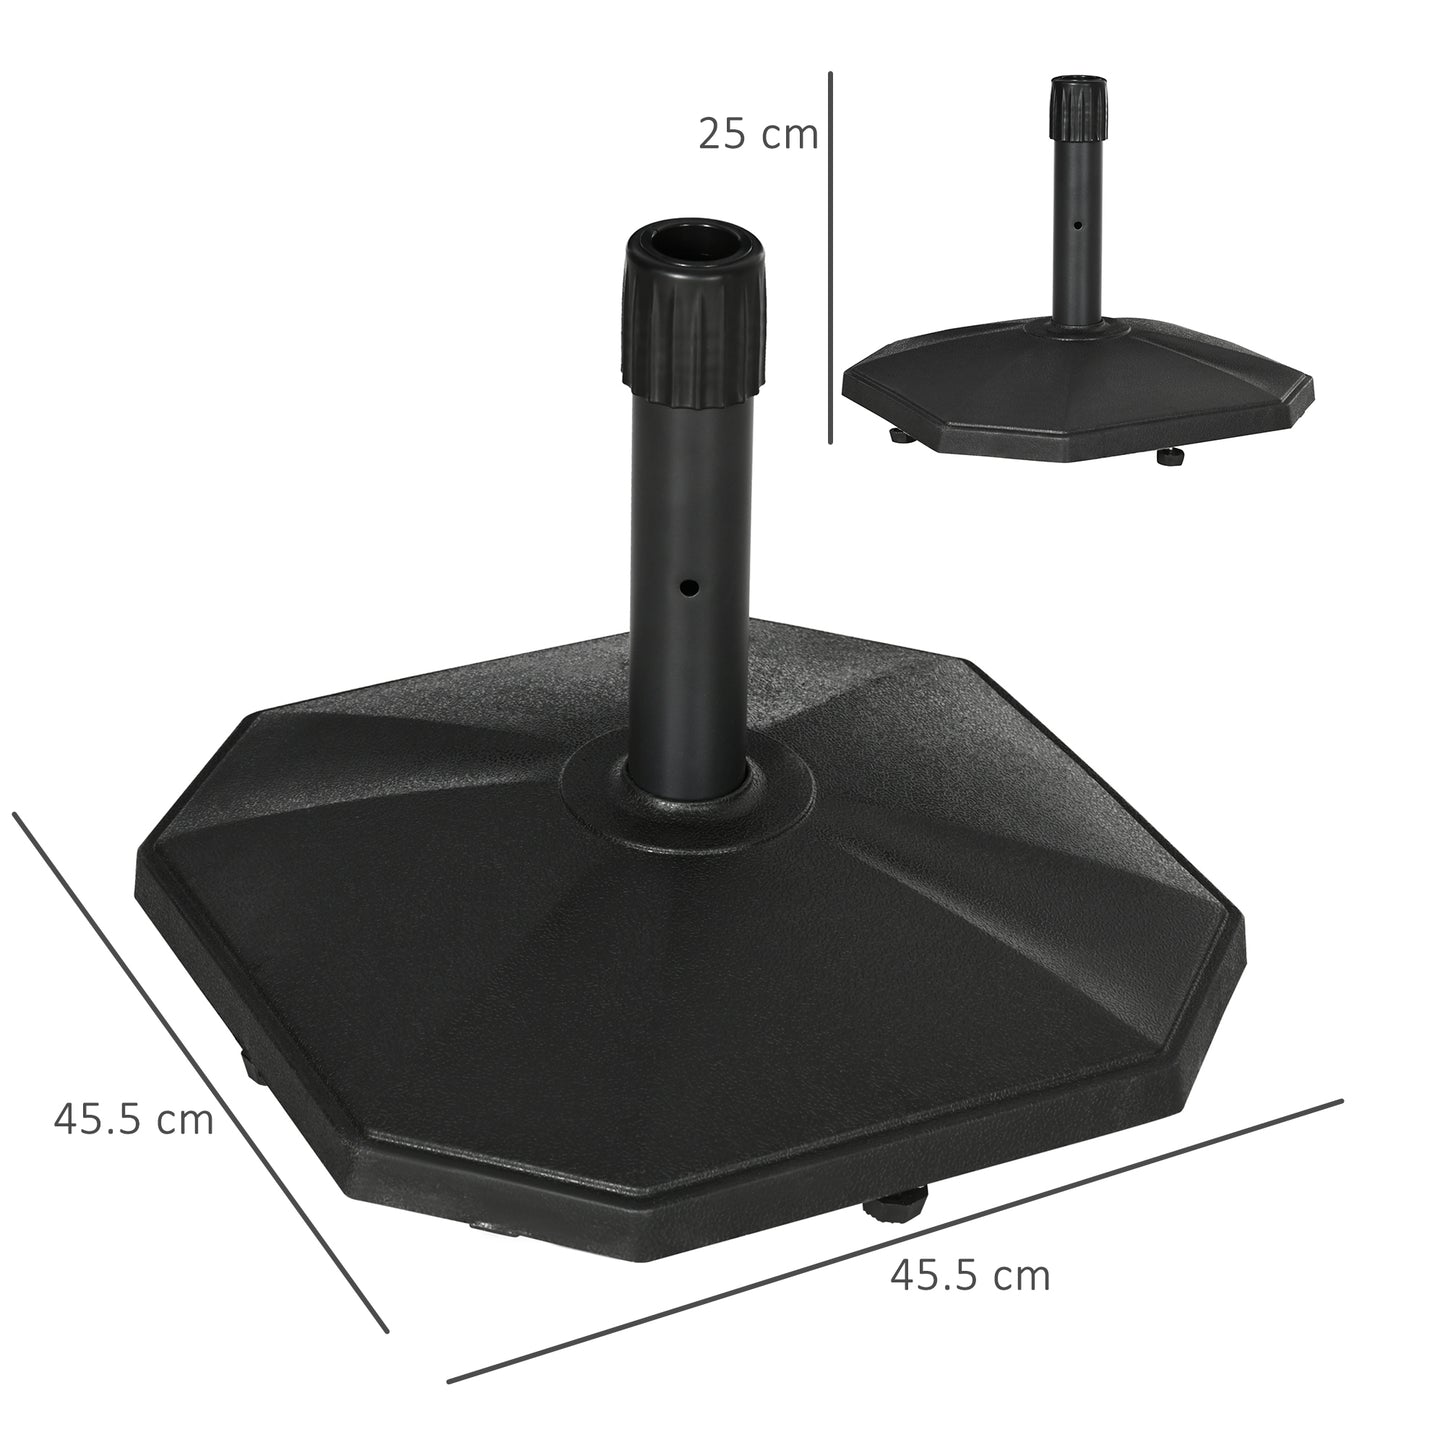 Outsunny Concrete Parasol Base: 18kg Umbrella Stand for 34mm, 38mm & 48mm Poles, Sturdy & Durable, Ebony Black